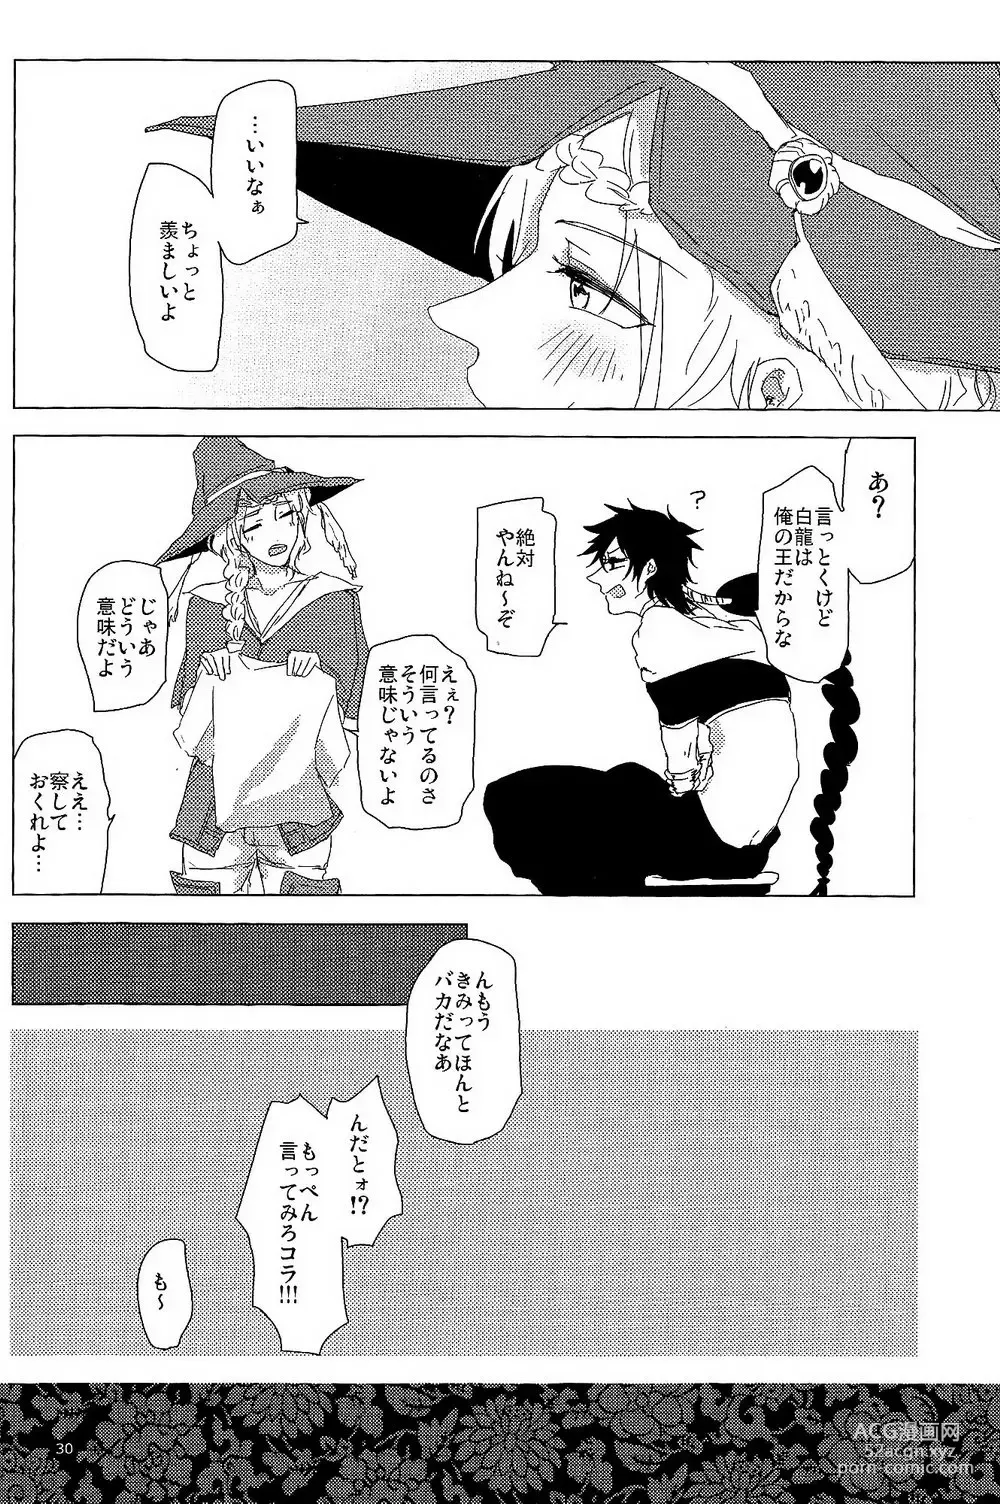 Page 27 of doujinshi 1064℃